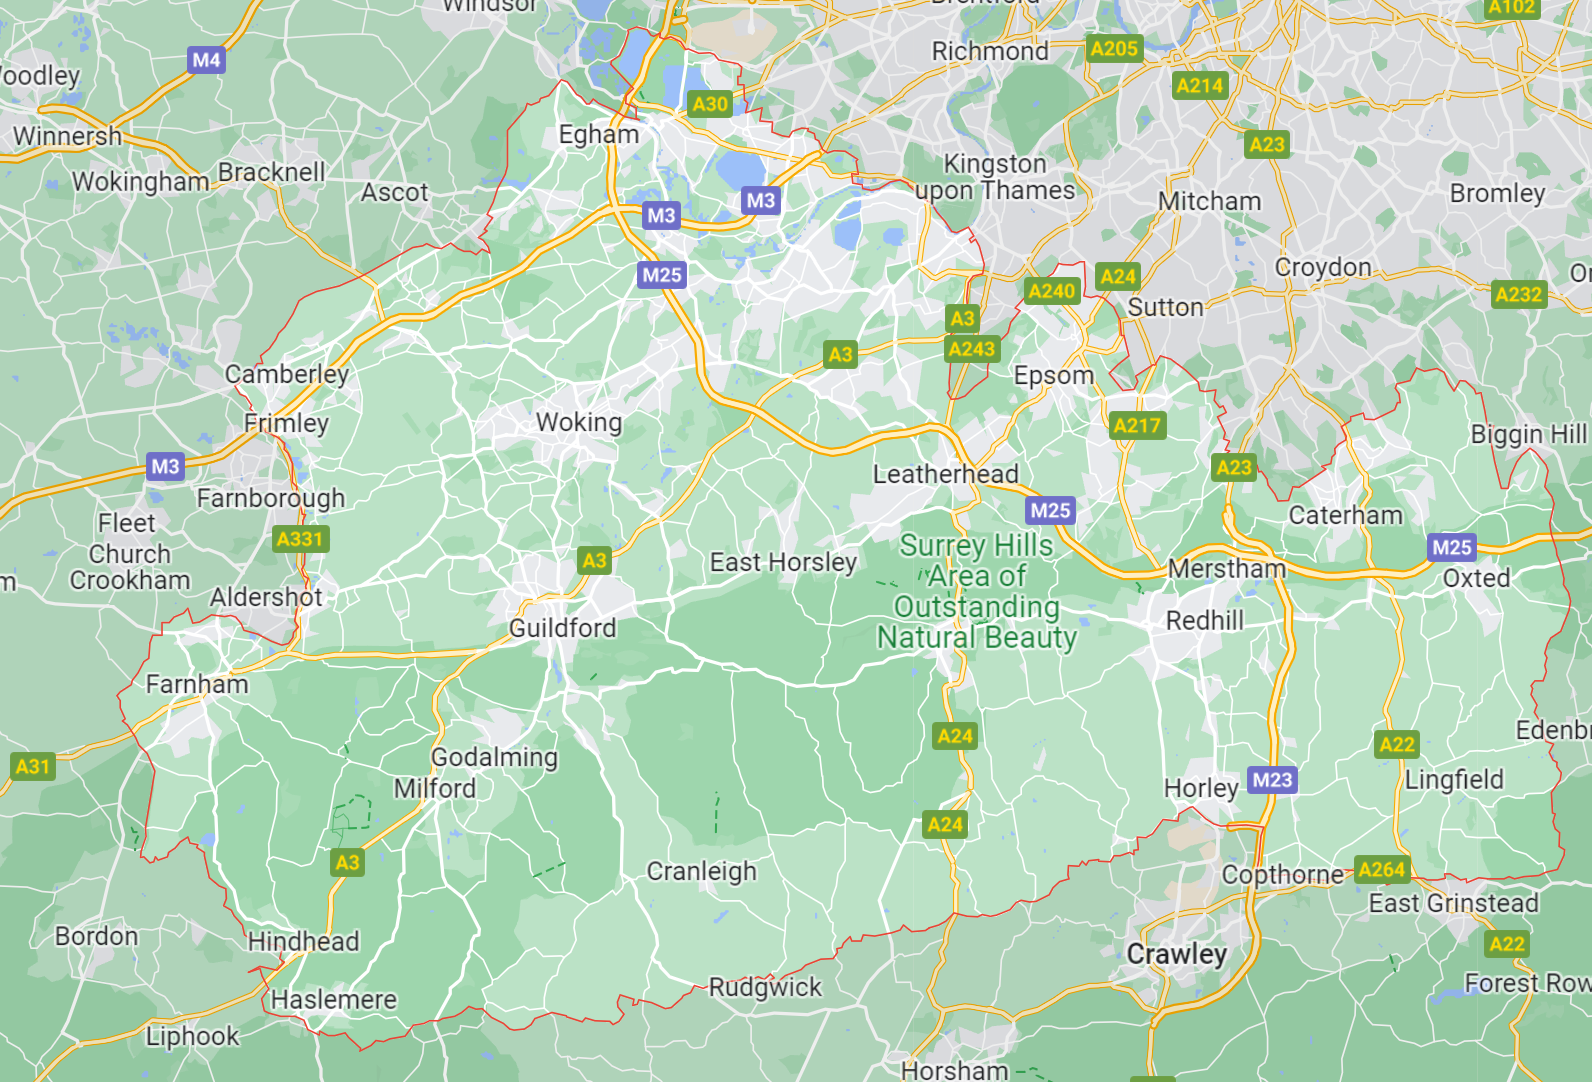 Map of Healthwatch Surrey area